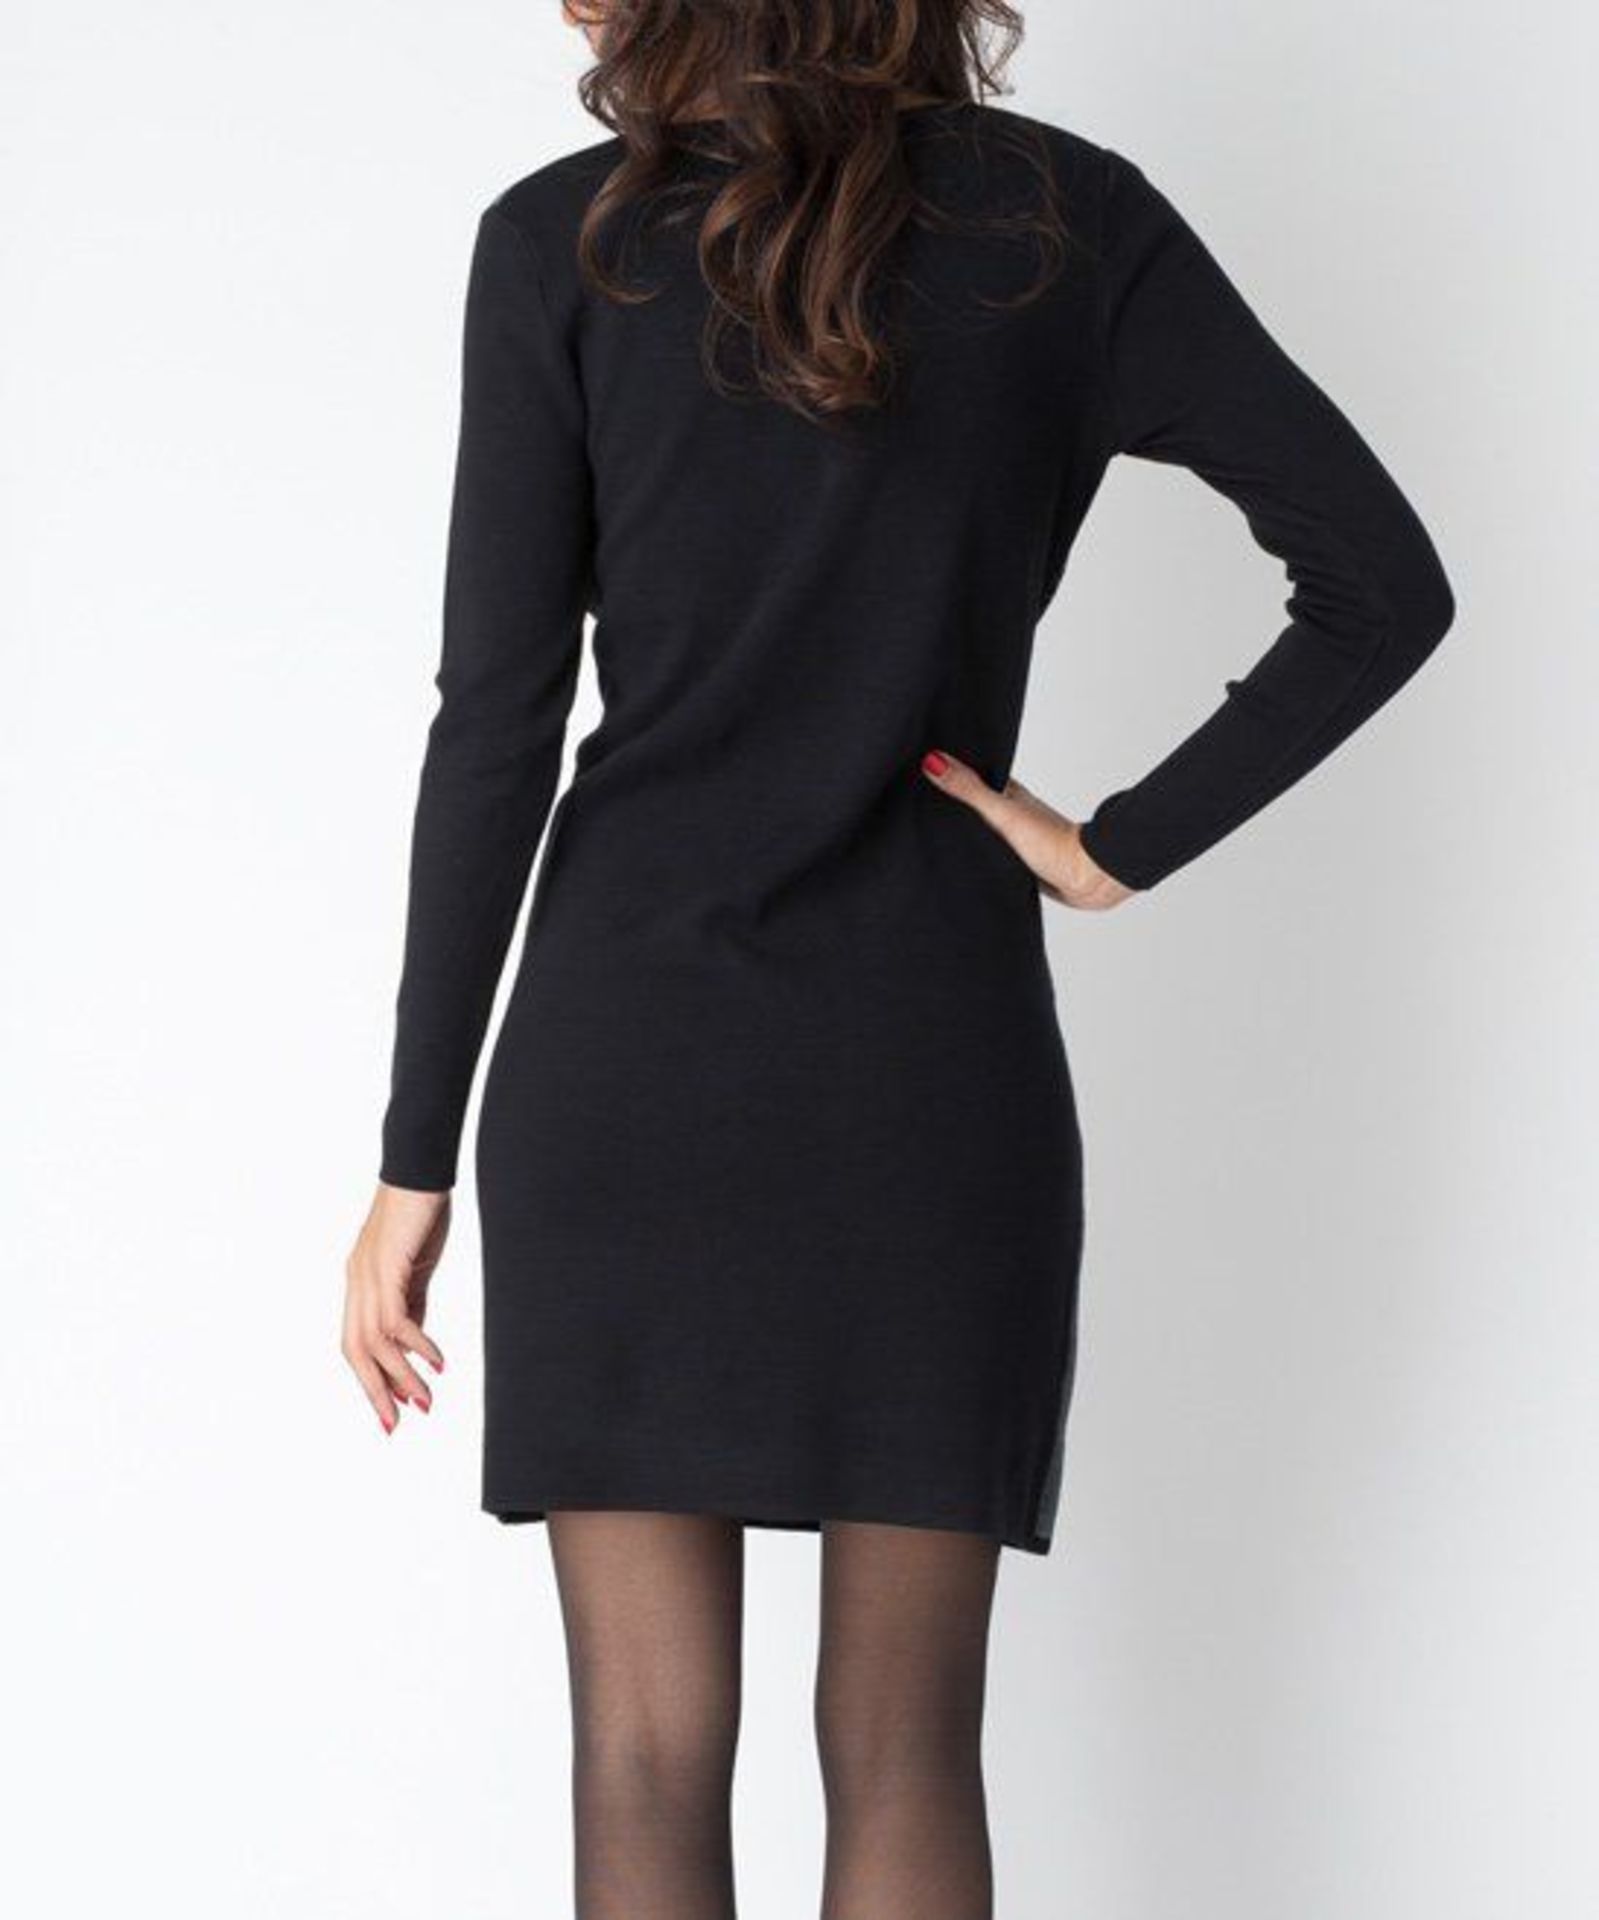 Yuka Paris Black & Blue Geometric Xena Dress (Uk Size 8:Us Size 4) (New with tags) [Ref: 30162802- - Image 2 of 2